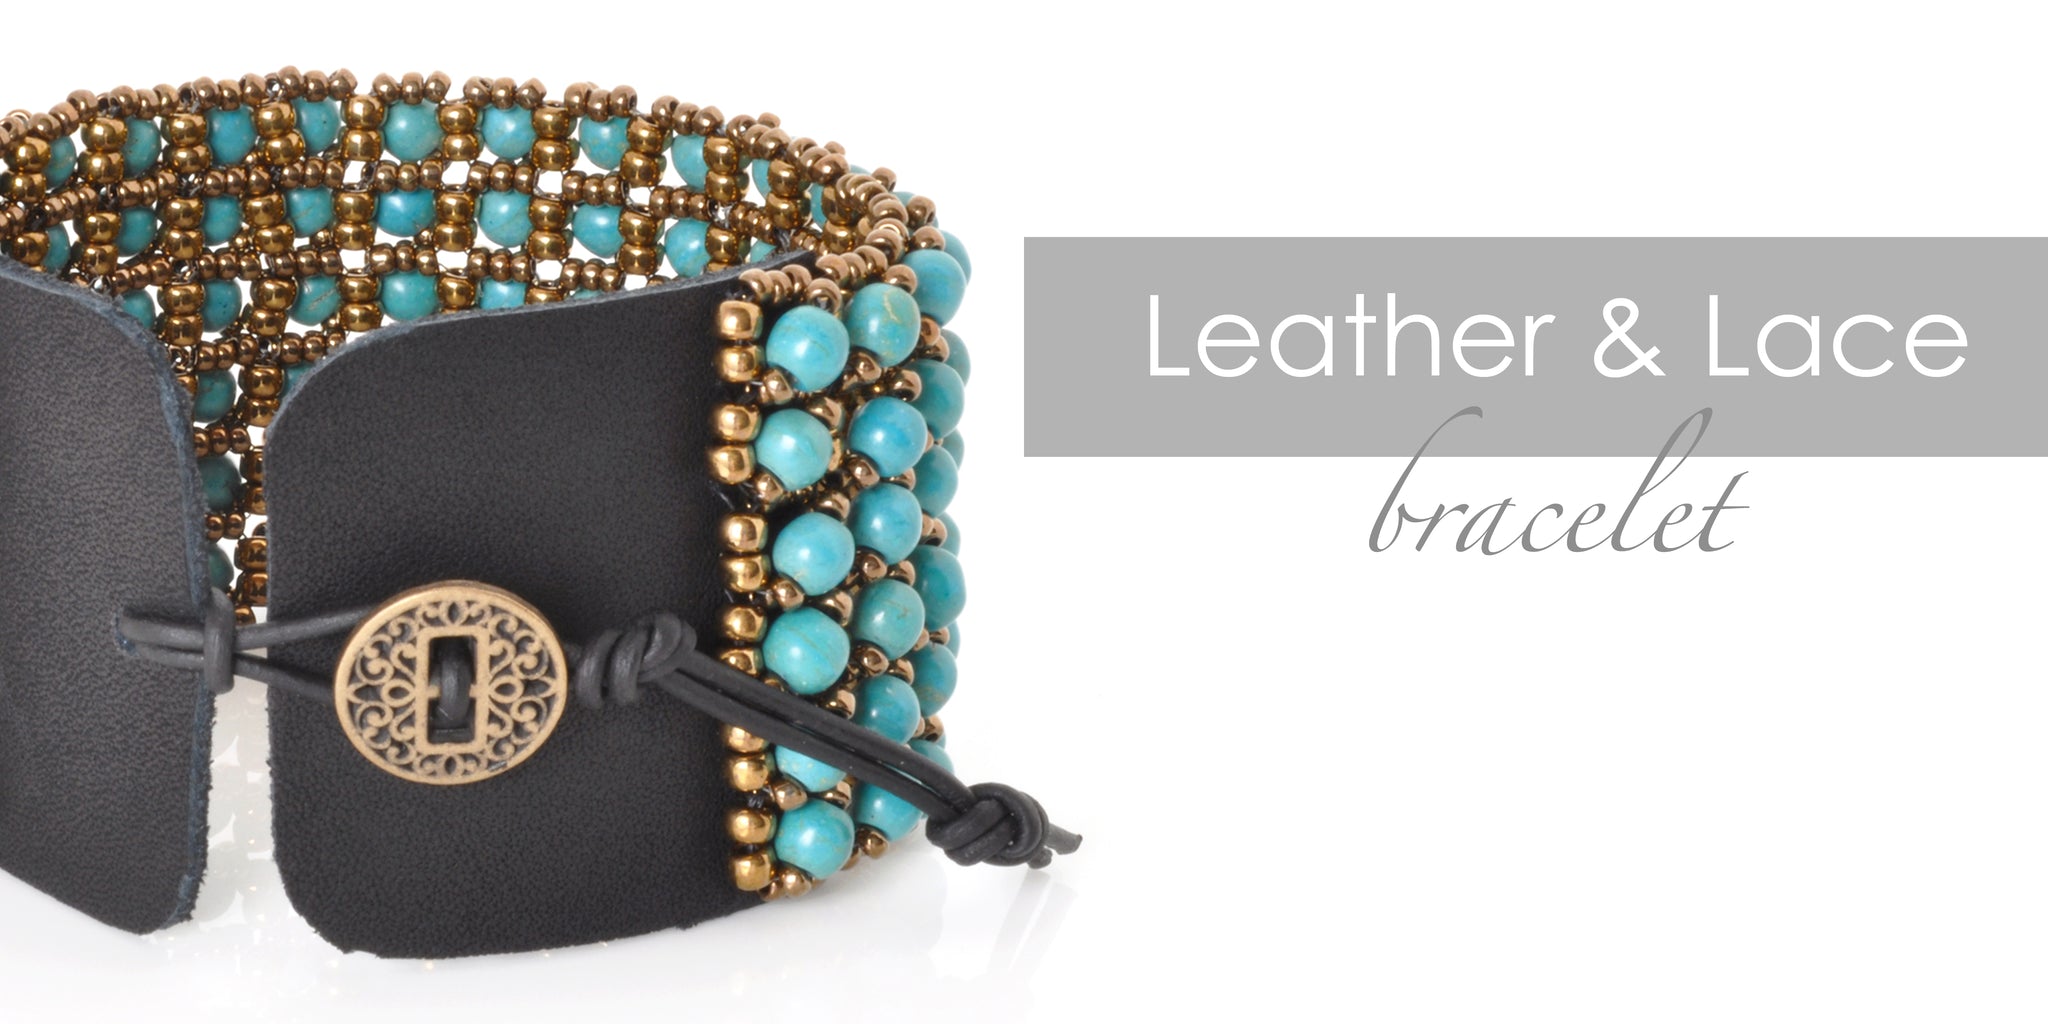 Leather & Lace Bracelet Tamara Scott Designs